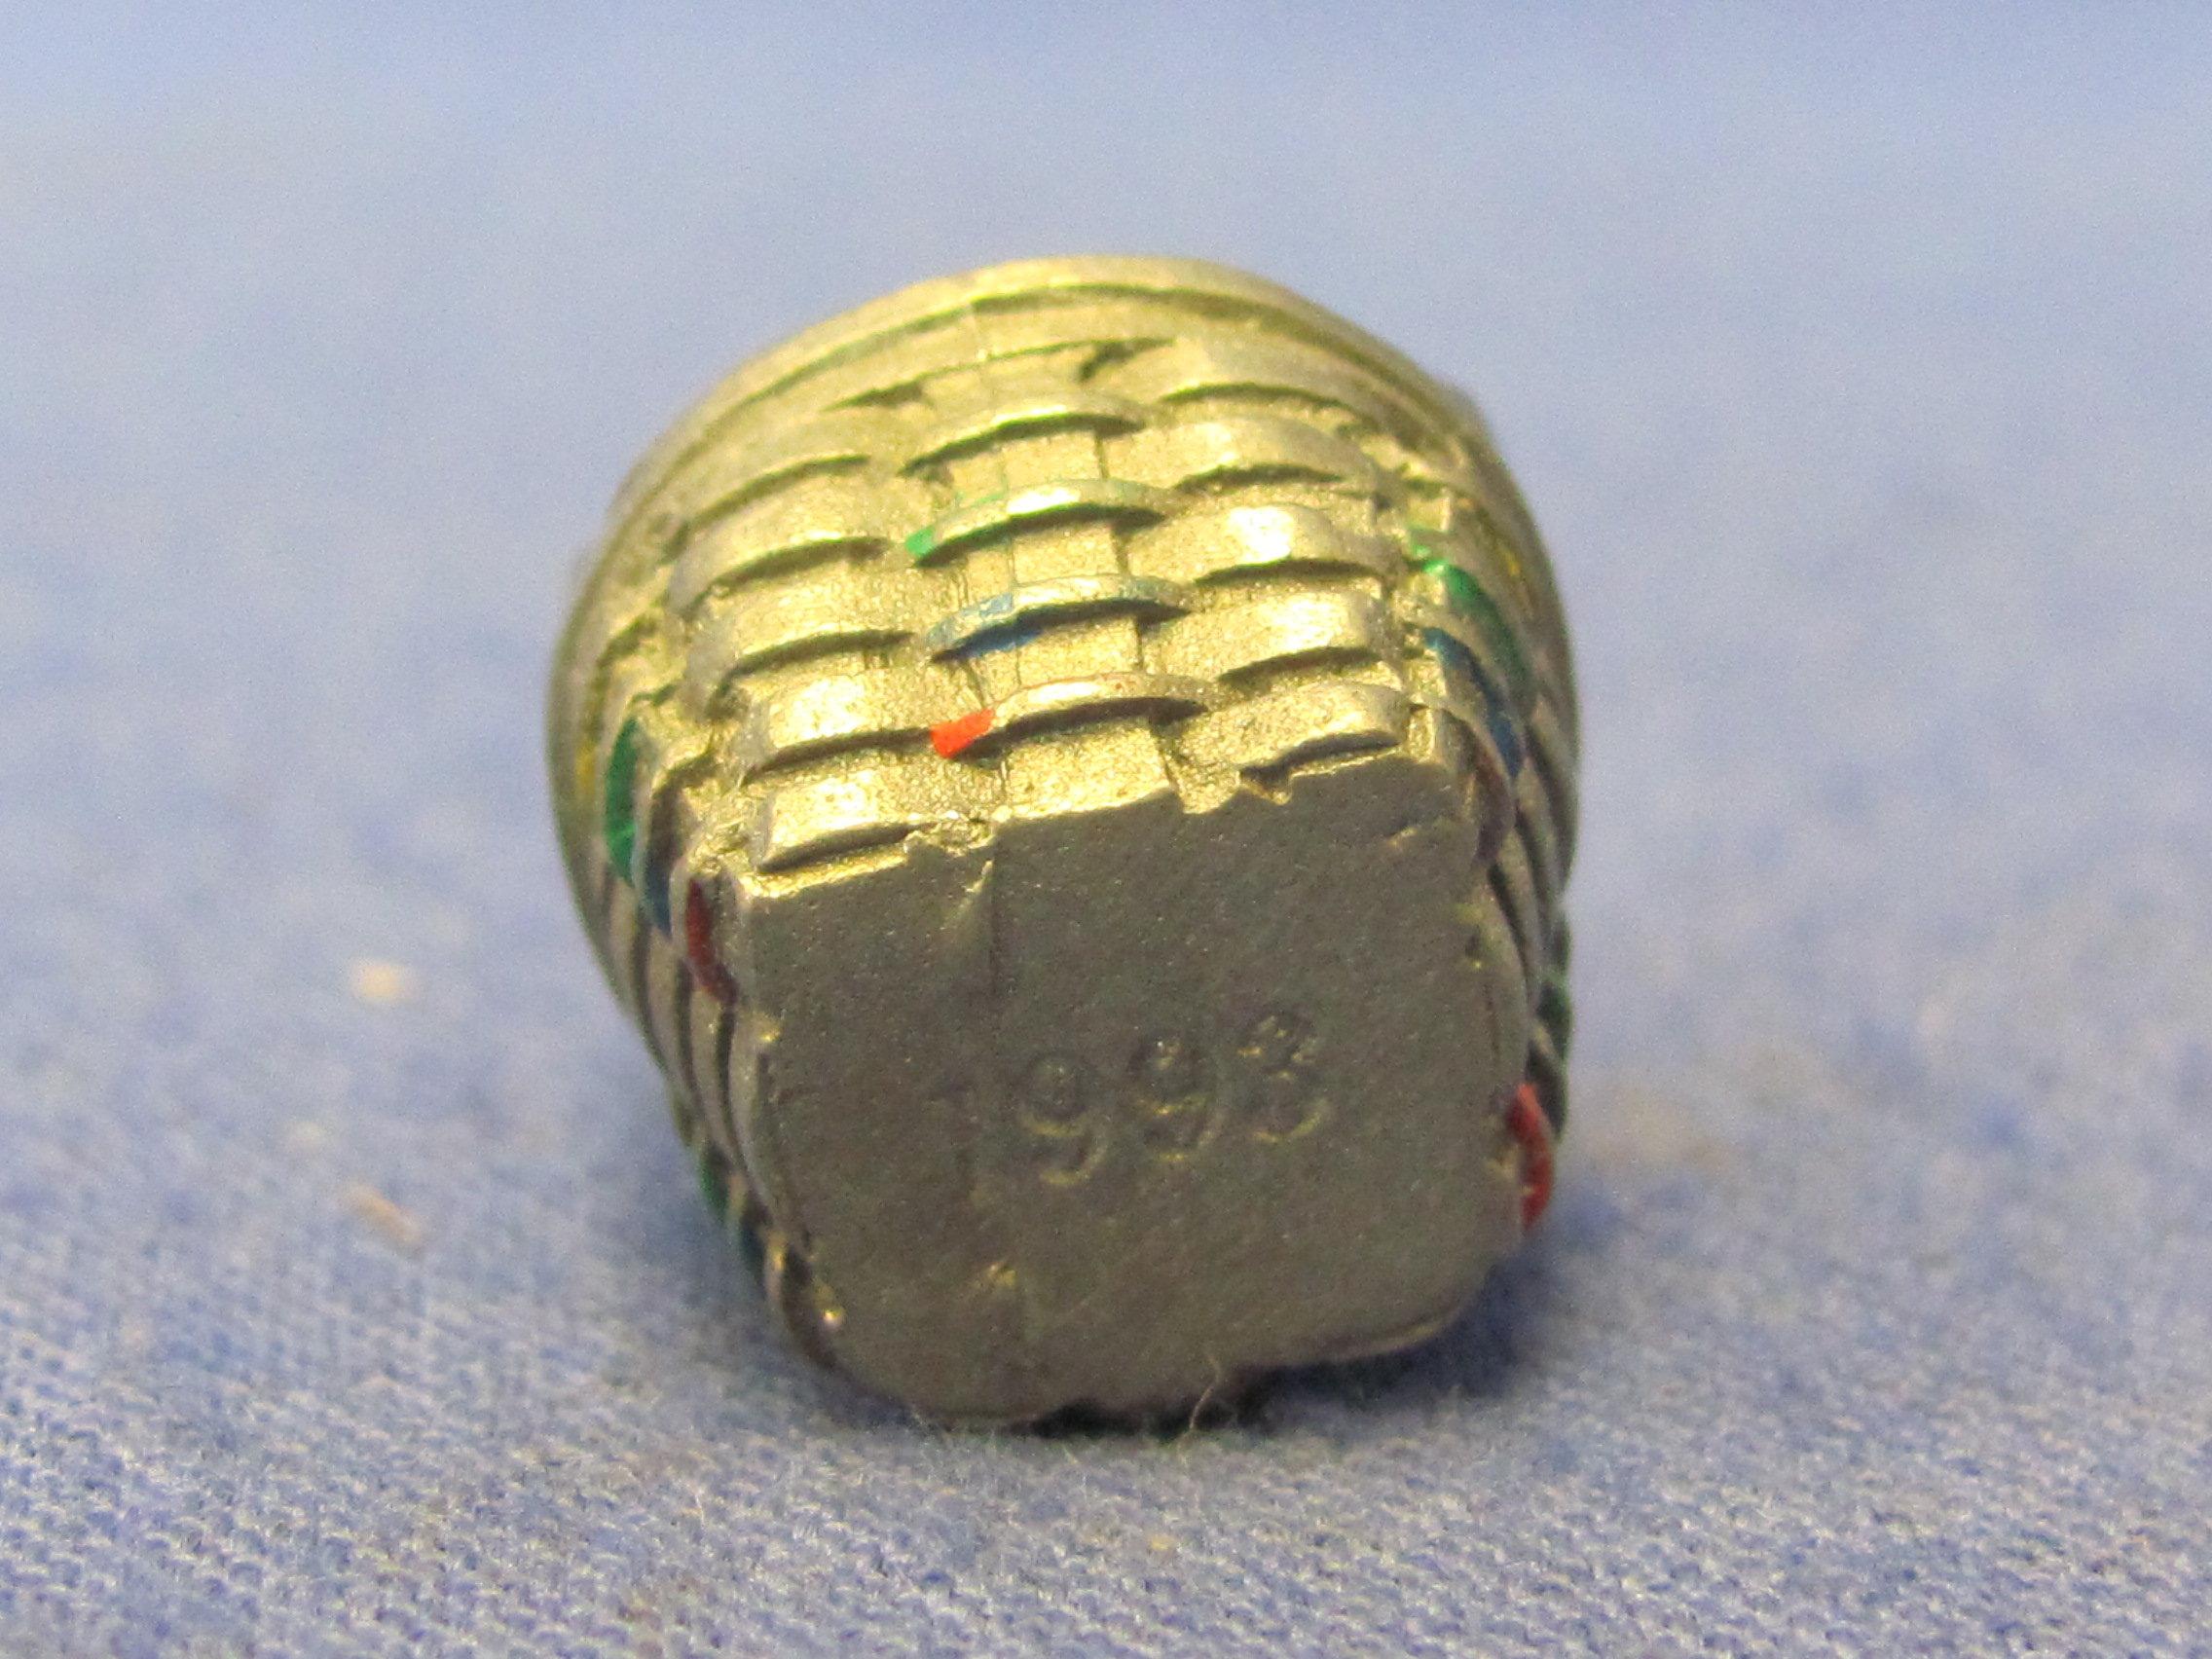 Miniature Metal Longaberger Baskets – 1 Tack Pin – 1 Pitcher – Tallest is 7/8”